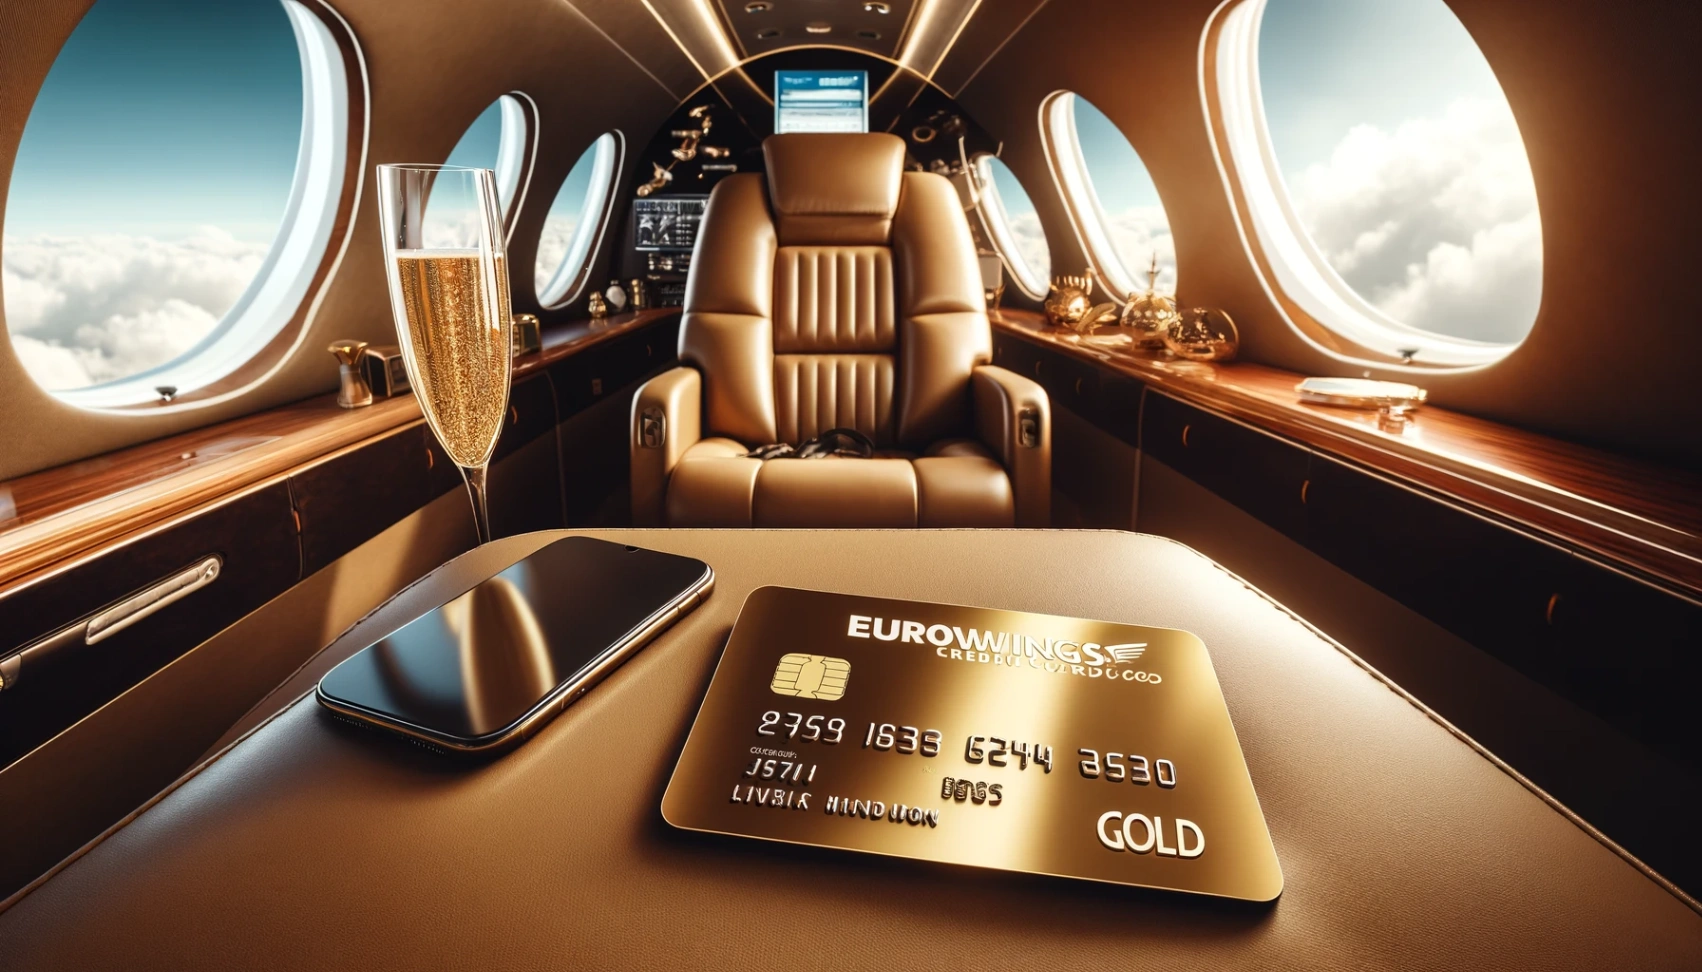 Eurowings Kreditkarte Gold: So bewerben Sie sich online